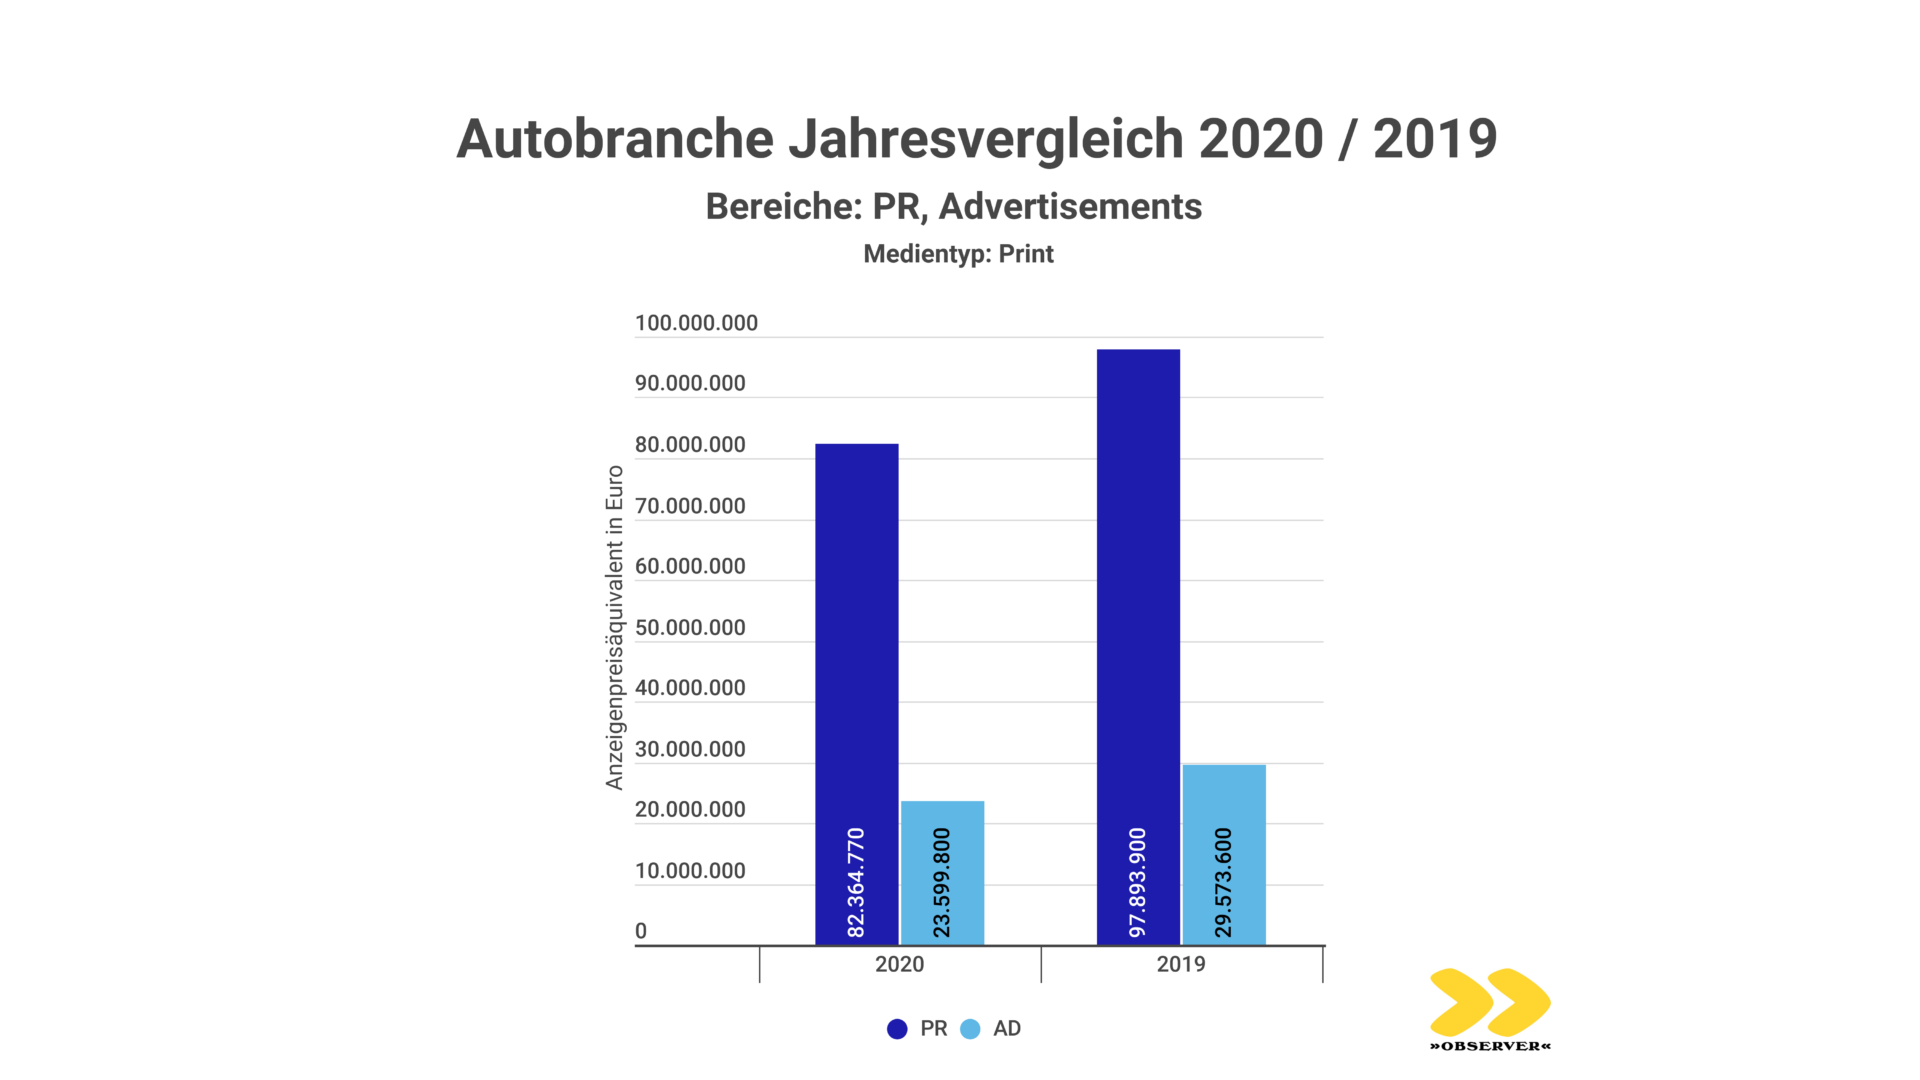 OBSERVER Analyse: Jahresvergleich Autobranche 2019/2020